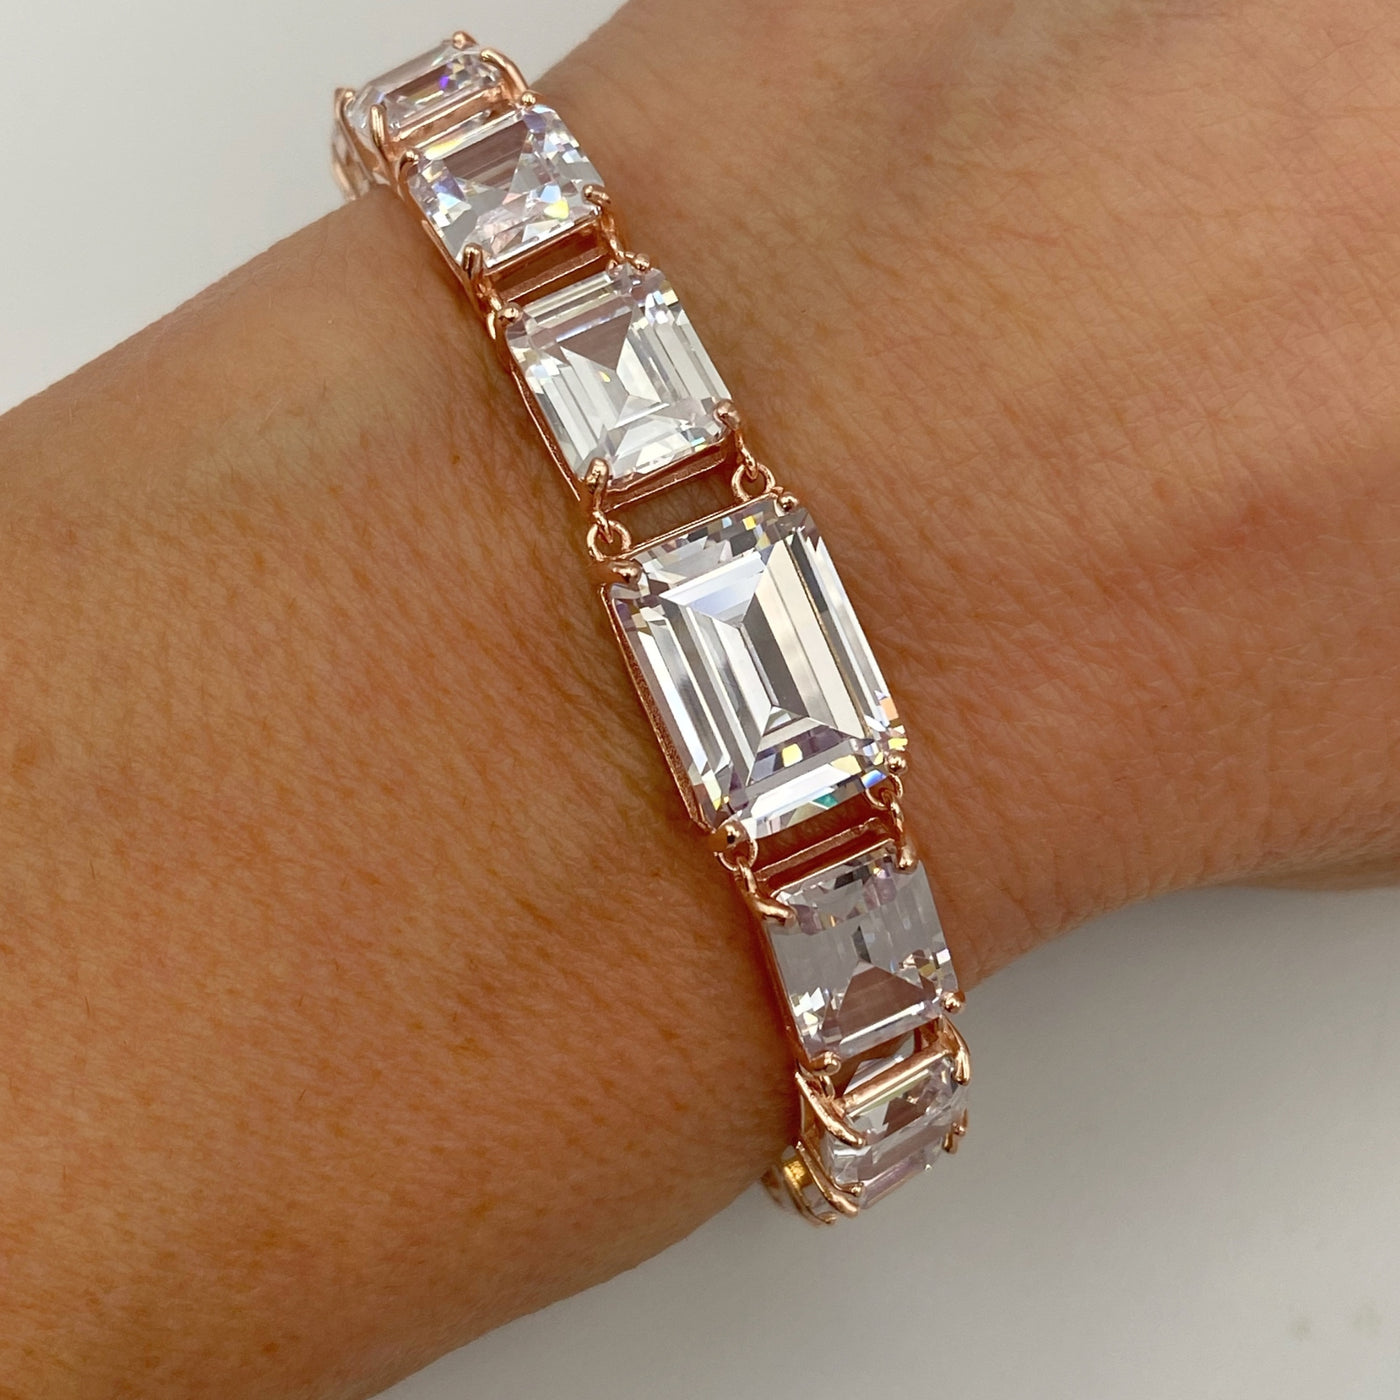 Silver bracelet with big zirconia stones